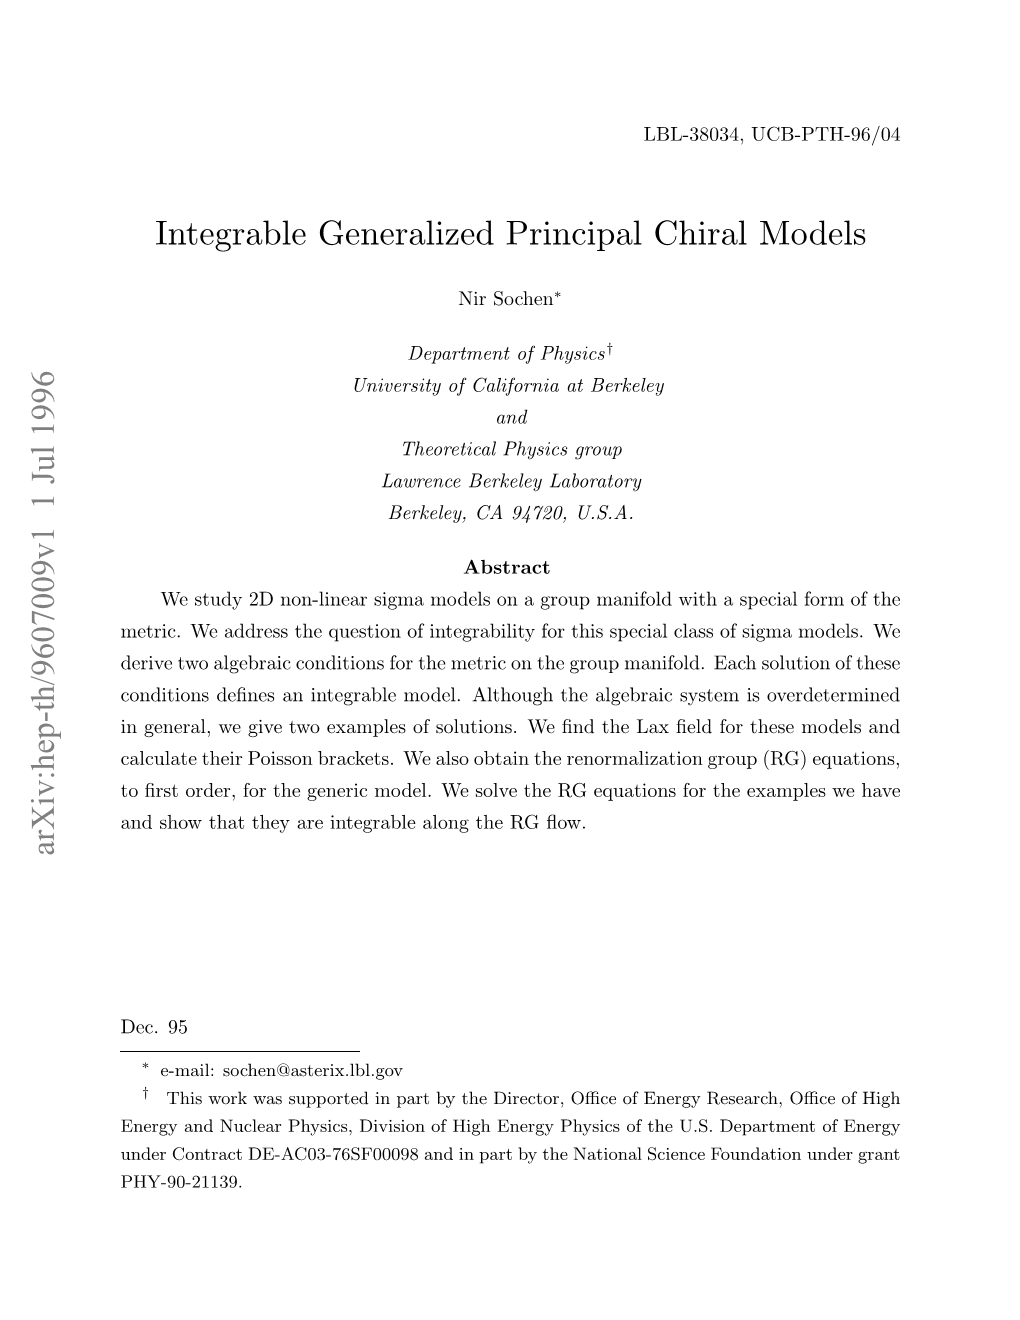 Integrable Generalized Principal Chiral Models